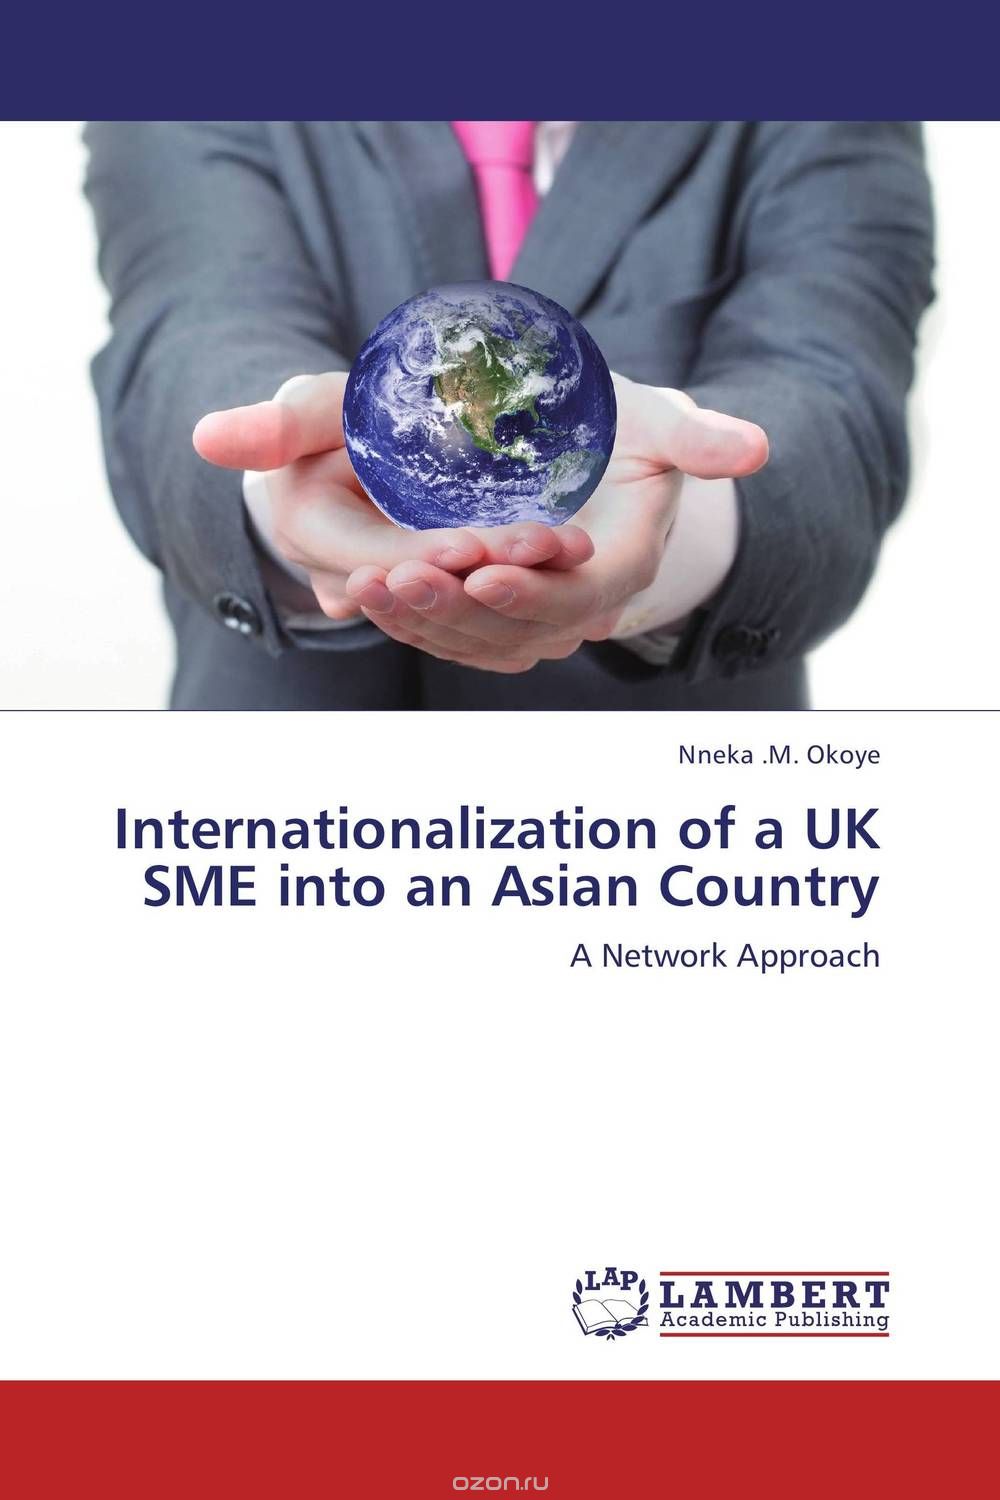 Скачать книгу "Internationalization of a UK SME into an Asian Country"